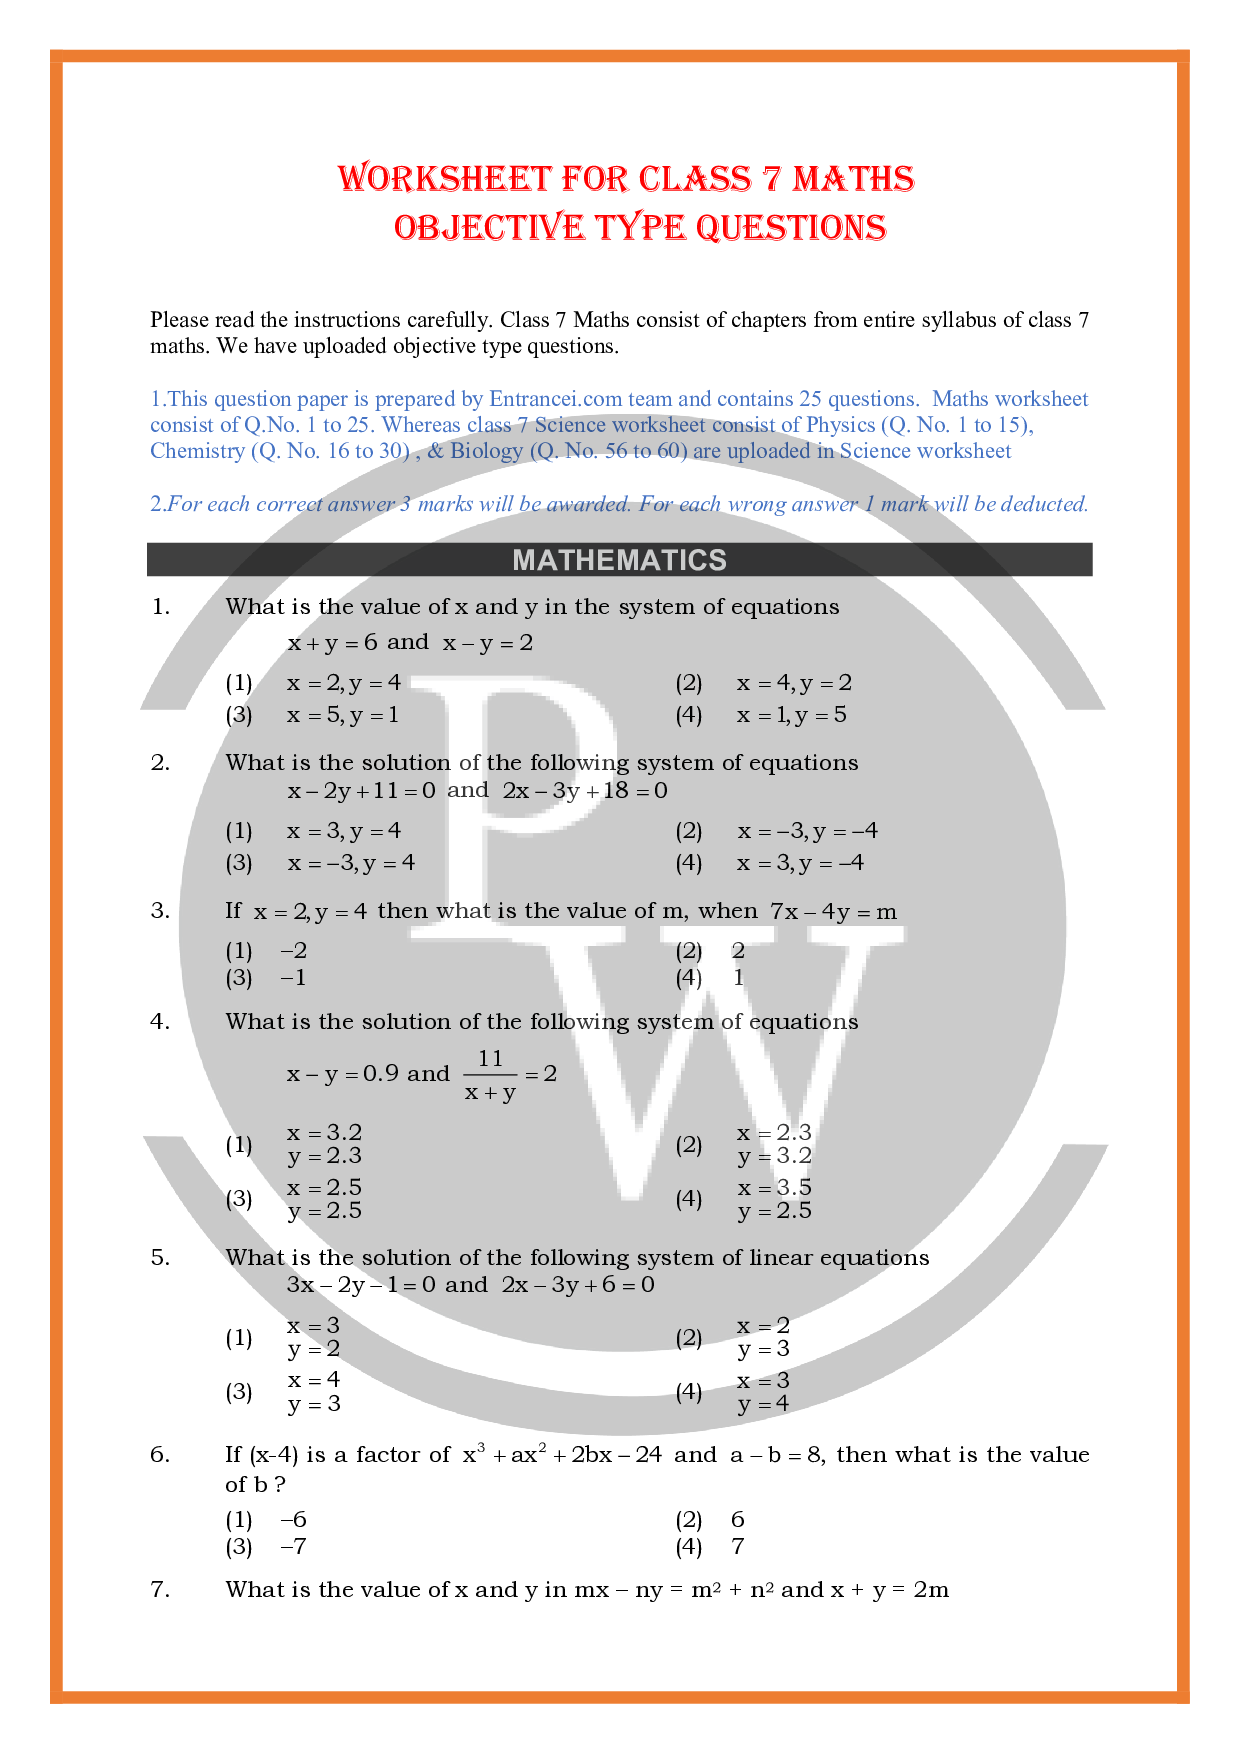 class-7-maths-worksheet-8-with-answer-key-physics-wallah-math-worksheet-answers